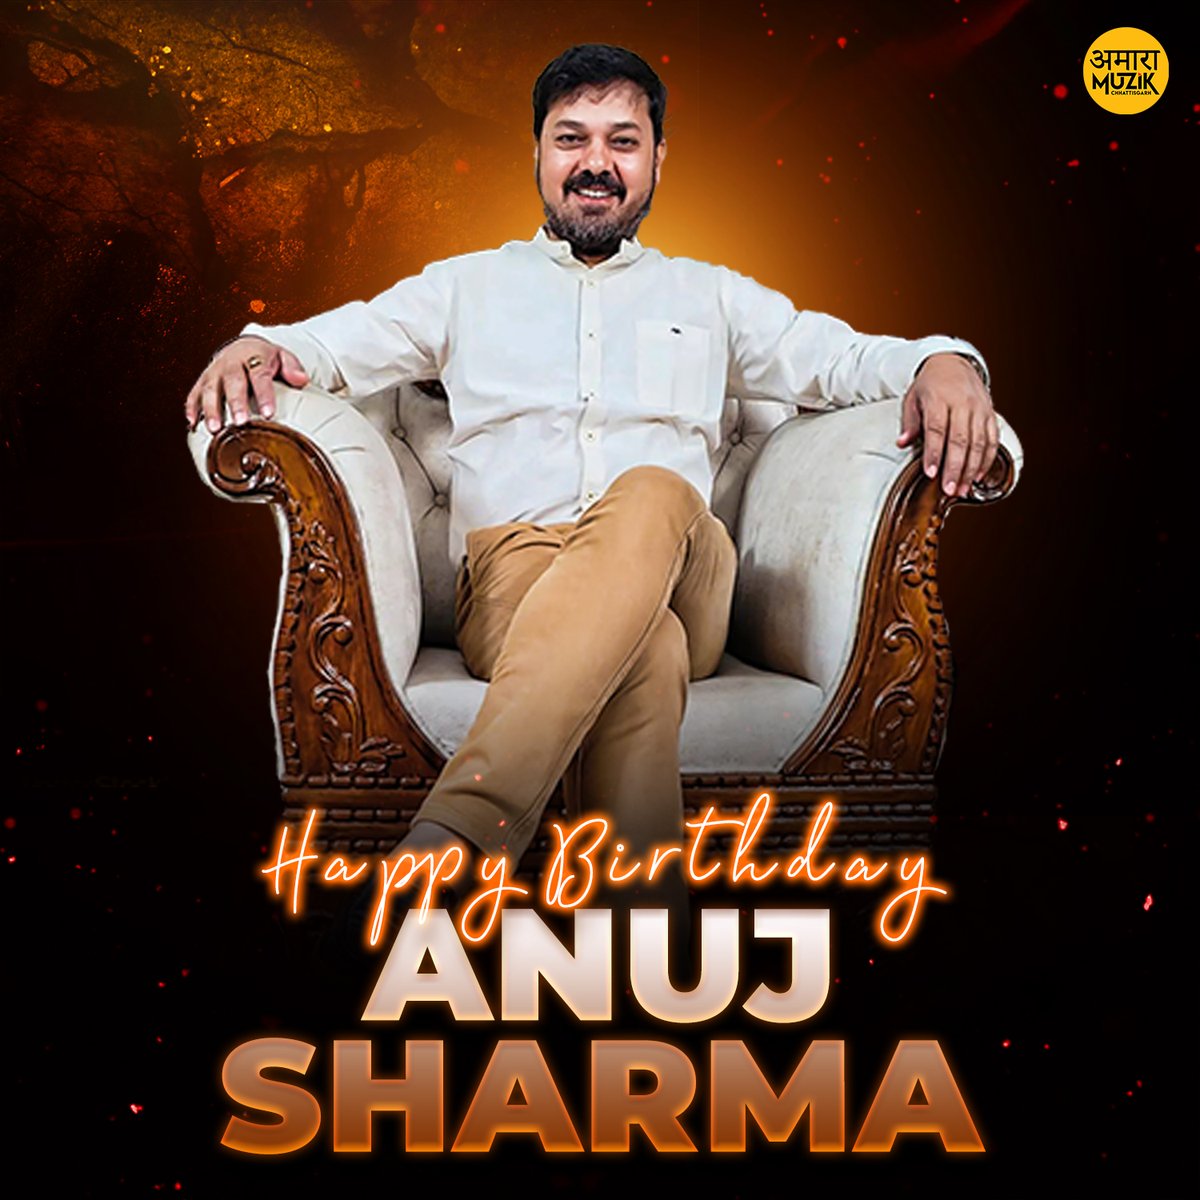 We Wish CG Actor #AnujSharma a very Happy Birthday !!!

#HappyBirthdayAnujSharma  🎉 ✨ 🎉 ✨ 

#HBDAnujSharma #AmaraMuzikCG #Chhollywood #AmaraMuzikChhattisgarh